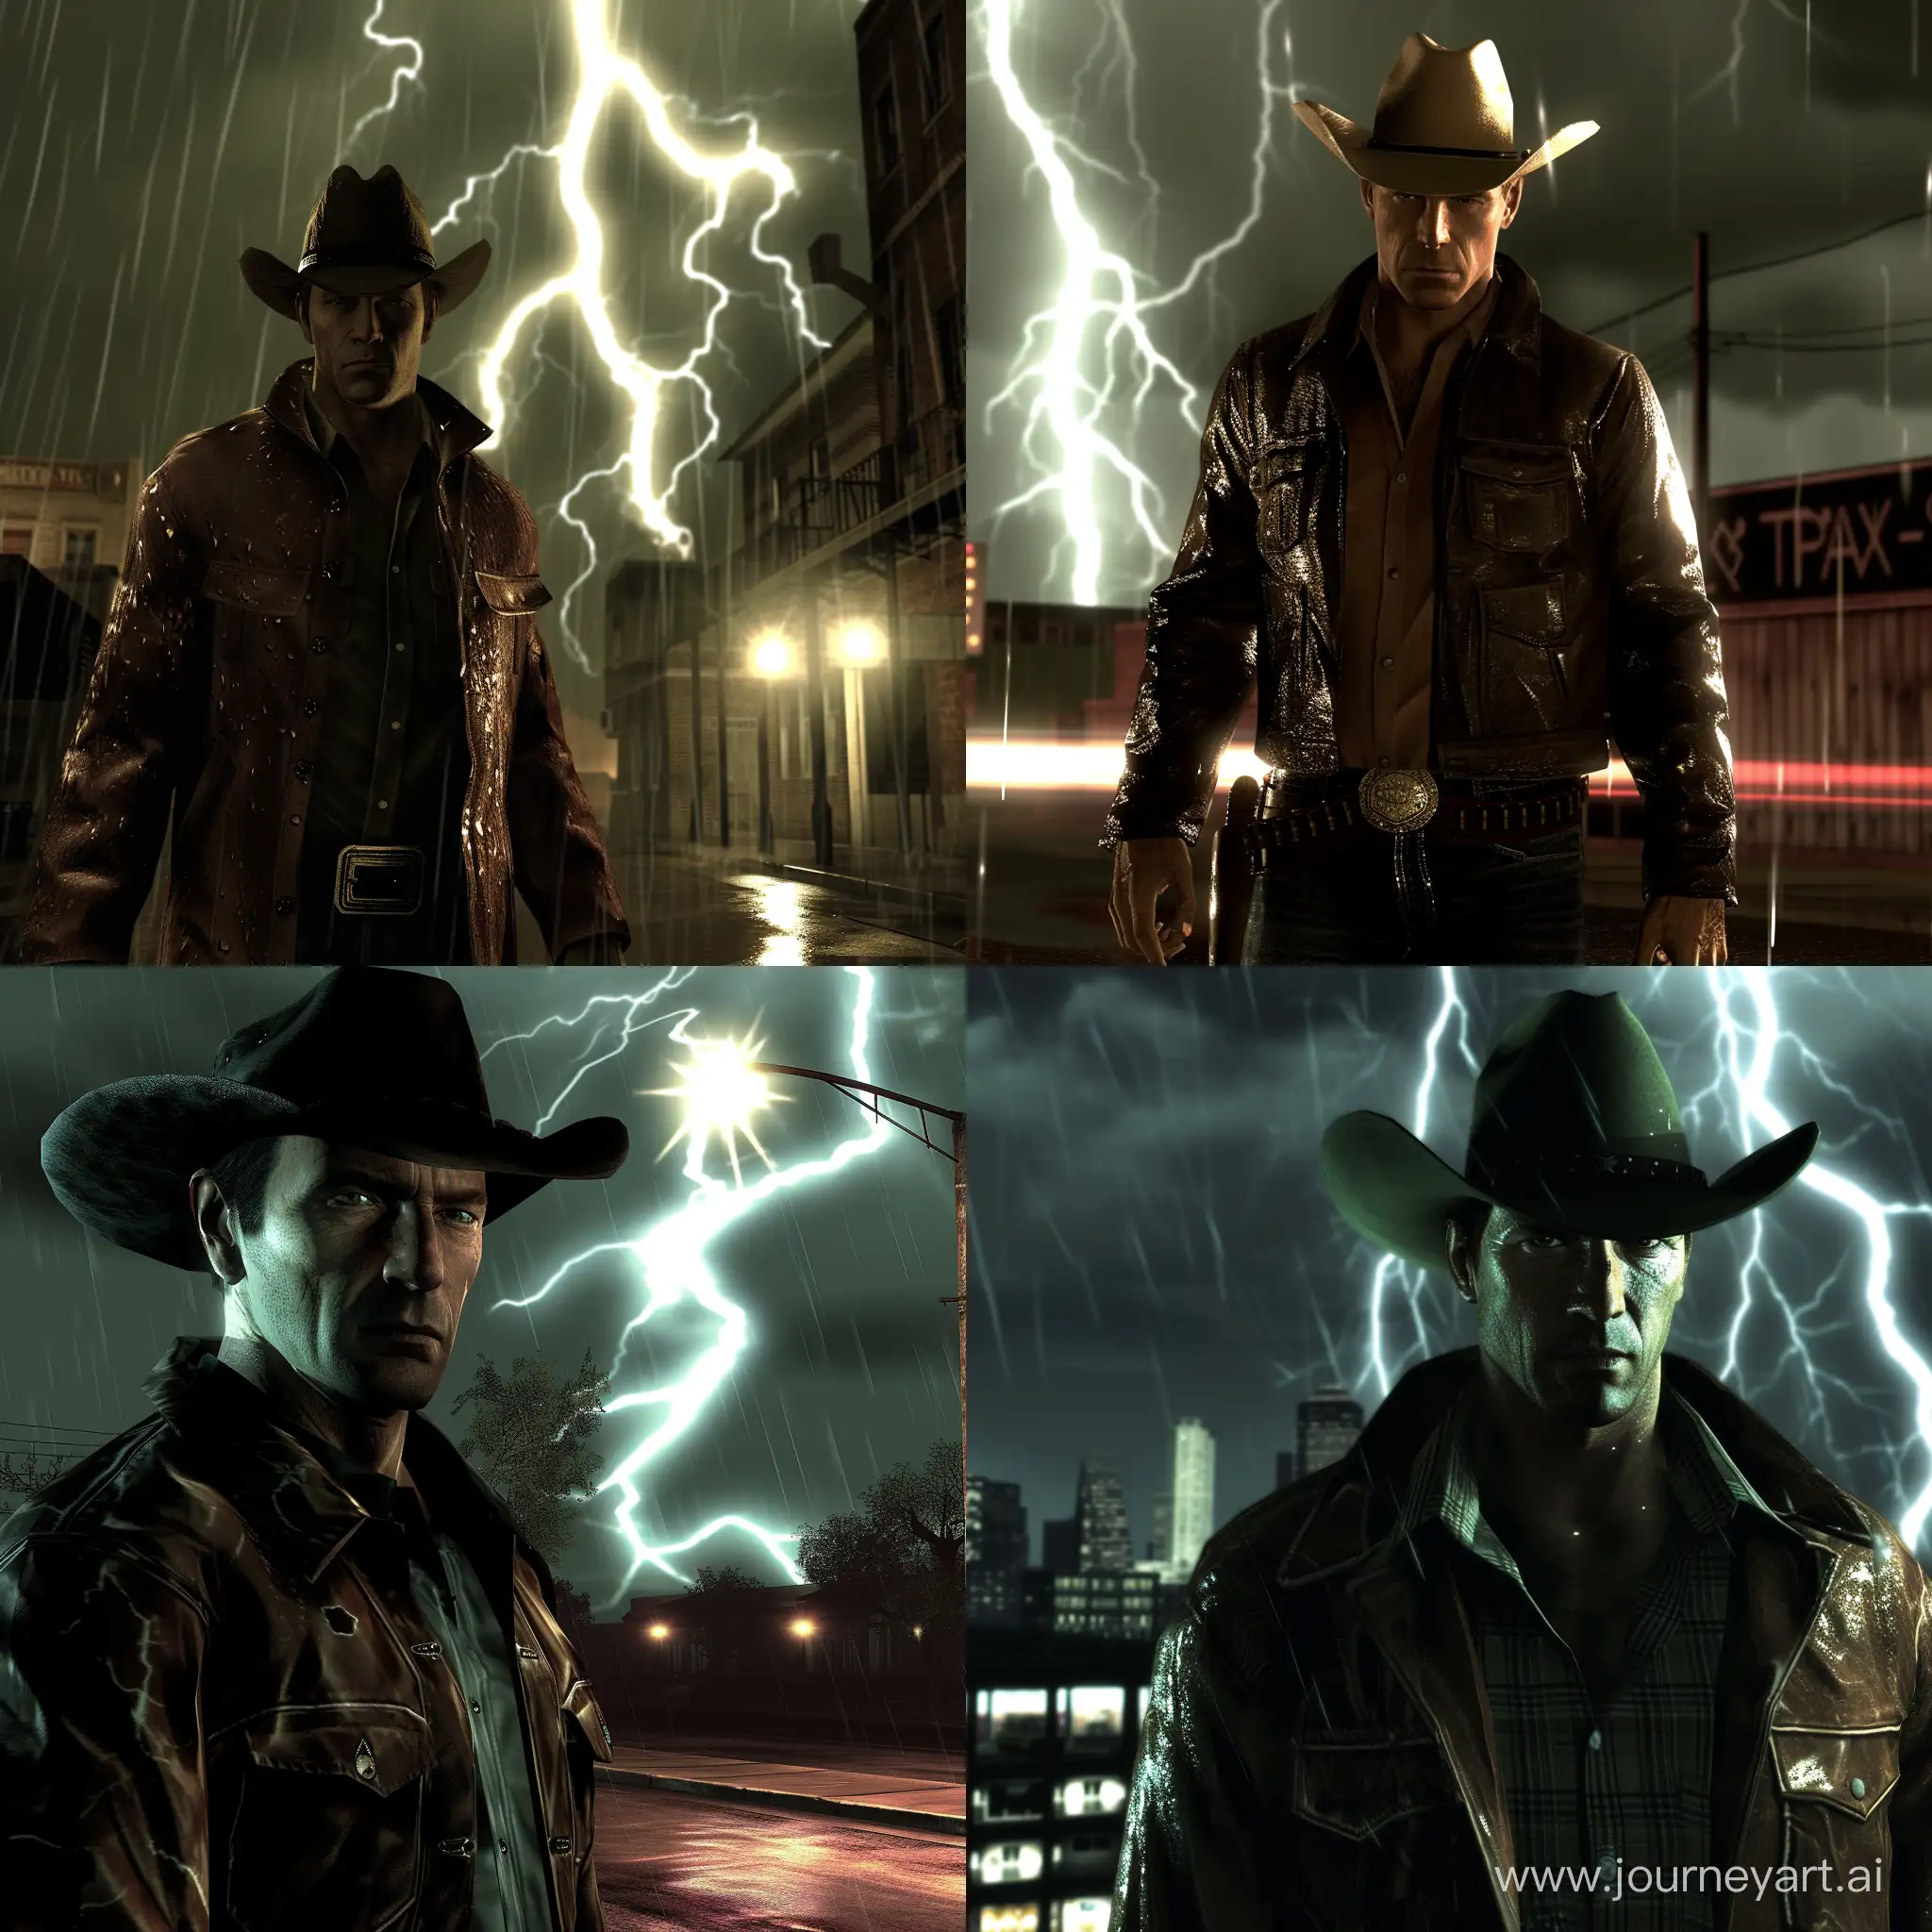 Max-Payne-Cowboy-Hat-Texas-PS2-Screenshot-with-Dramatic-Lightning